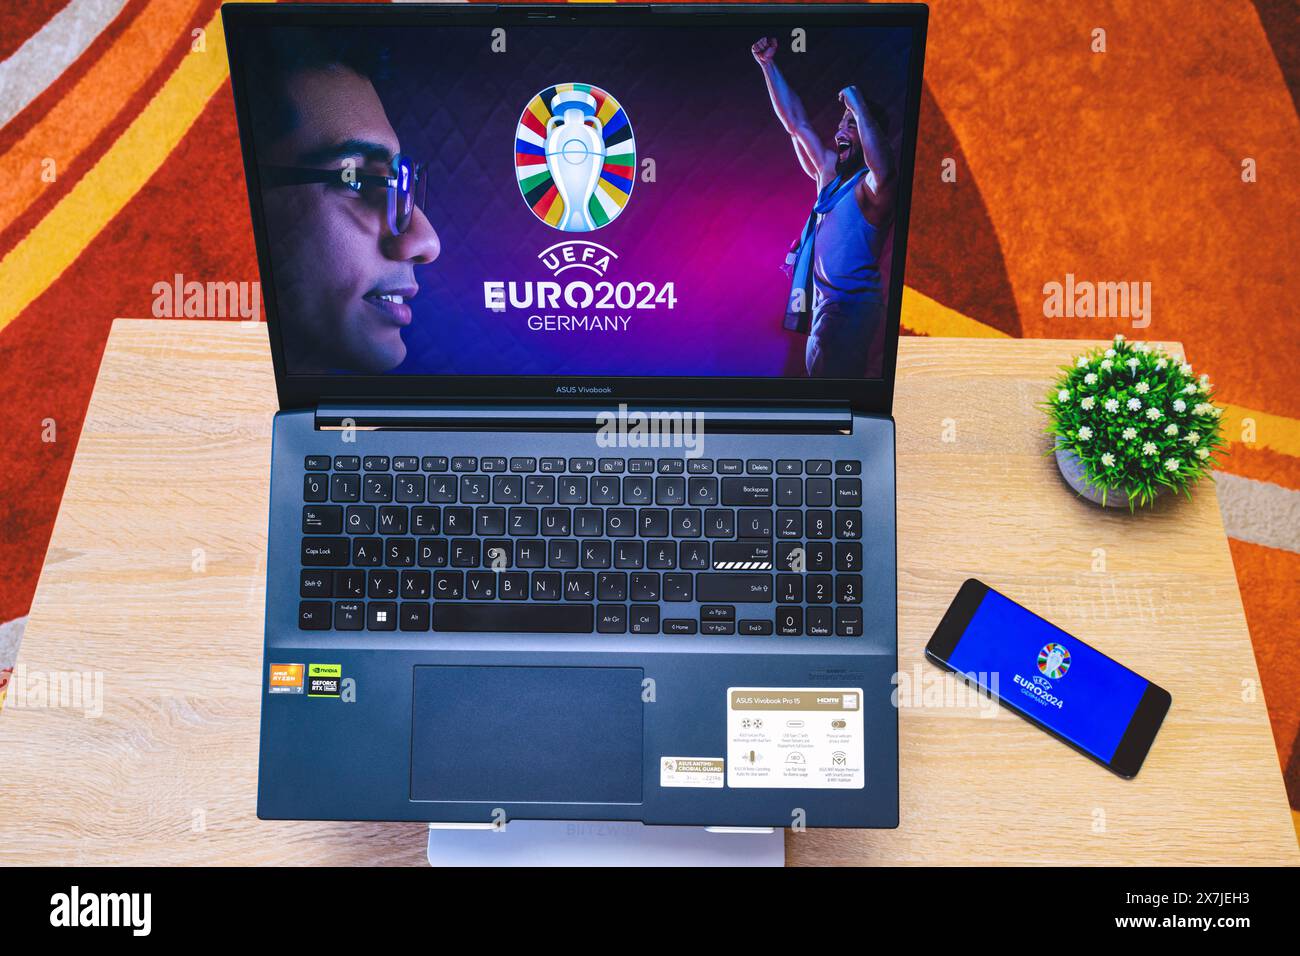 UEFA European Football Championship 2024 wallpaper on a laptop screen and UEFA European Football Championship 2024 logo on a phone screen, top view Stock Photo